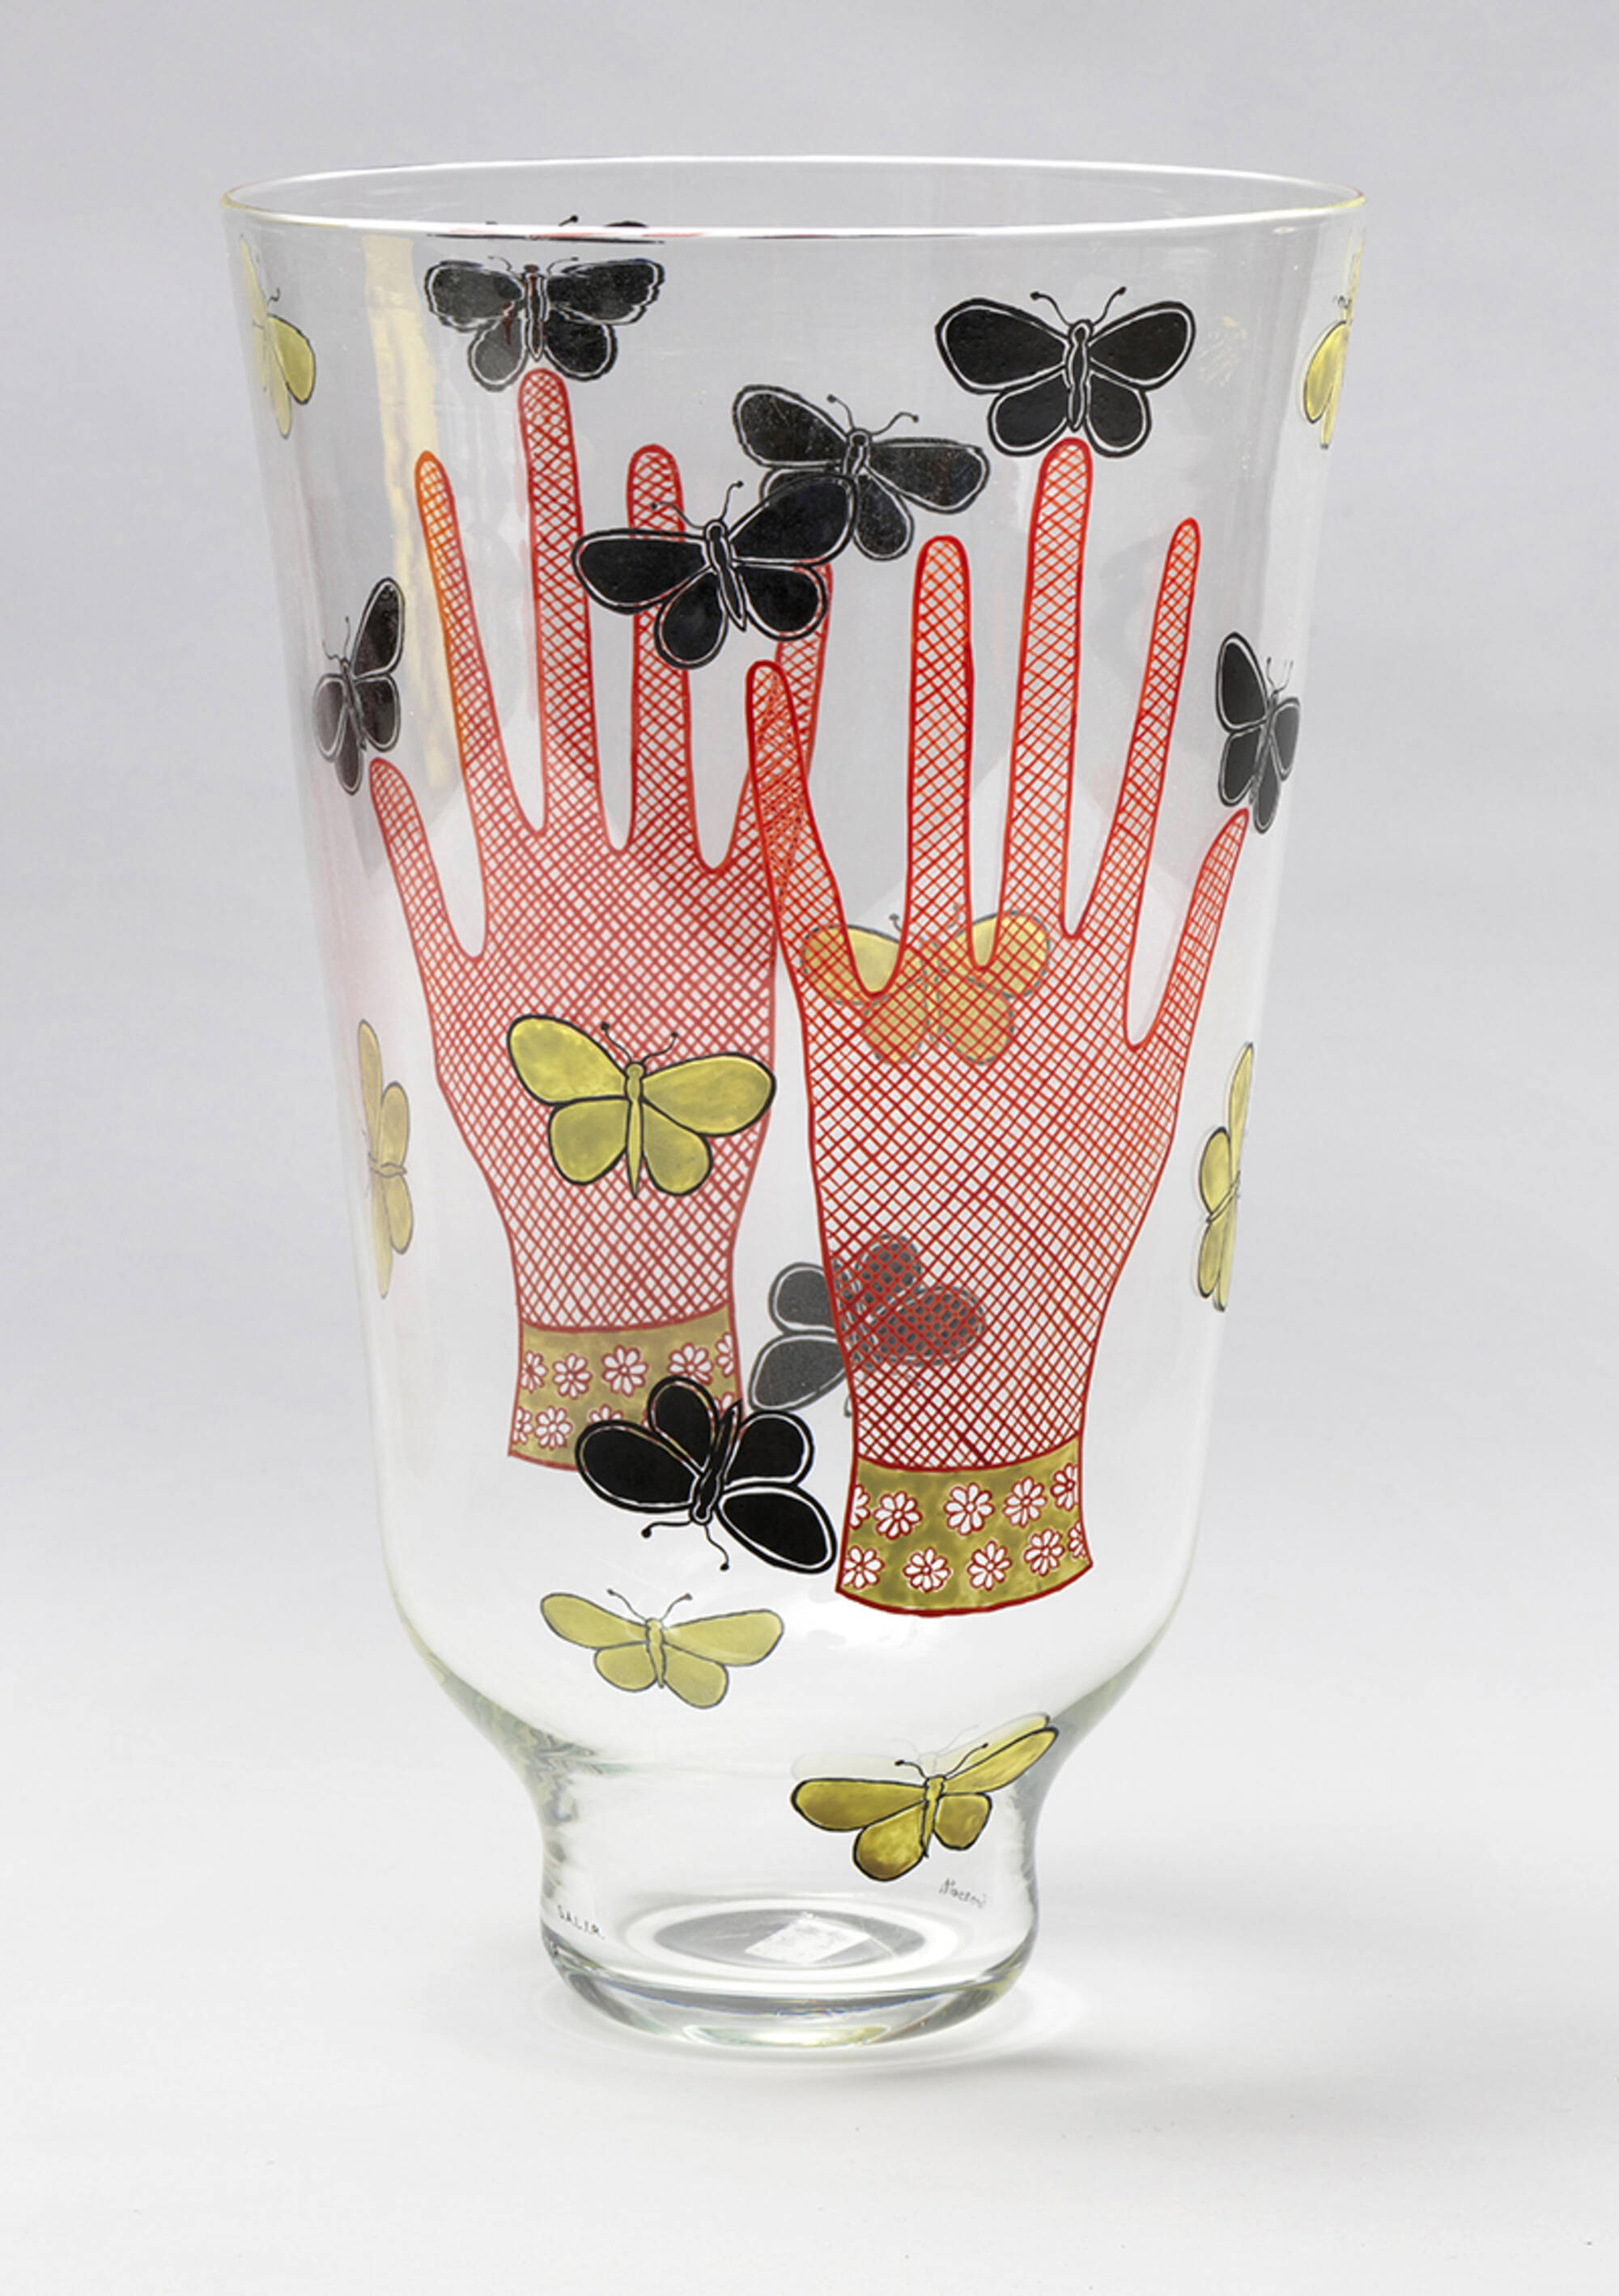 Vleien veel plezier antenne 49: PIERO FORNASETTI, Hands and Butterflies vase < Modern Art & Design, 28  February 2021 < Auctions | Los Angeles Modern Auctions (LAMA)